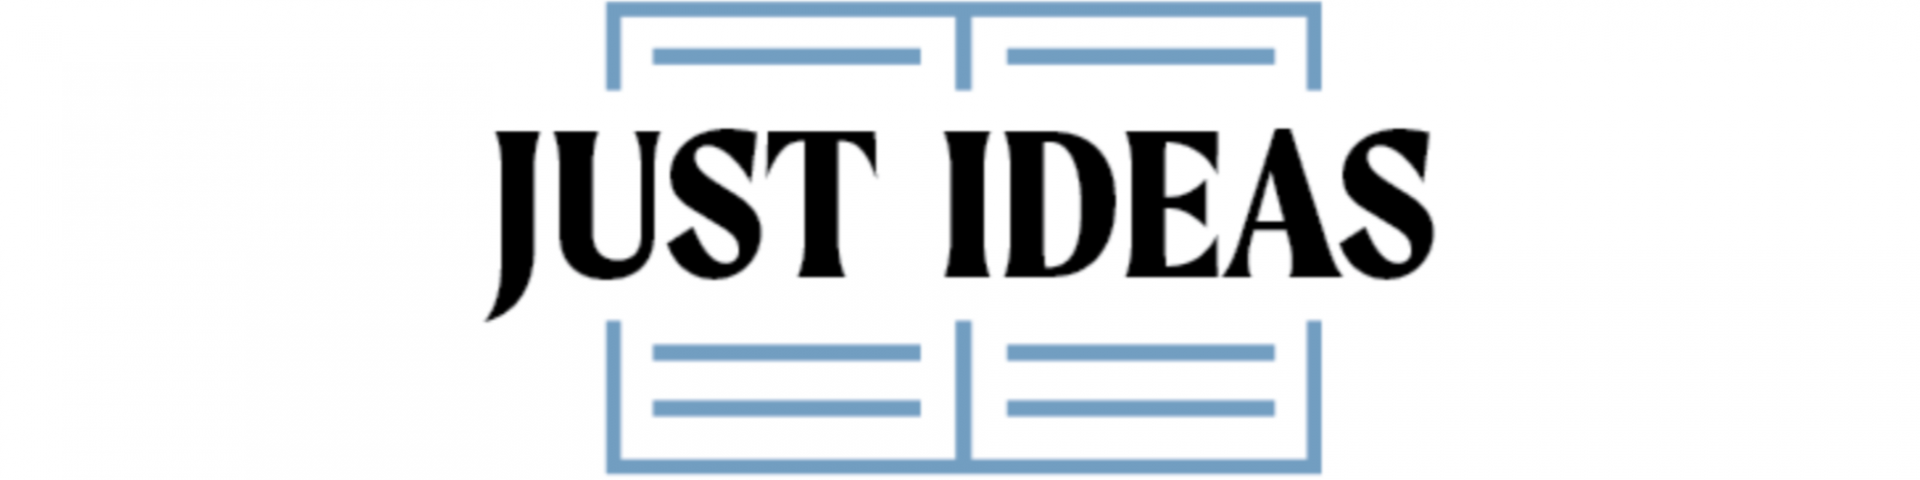 Just Ideas logo